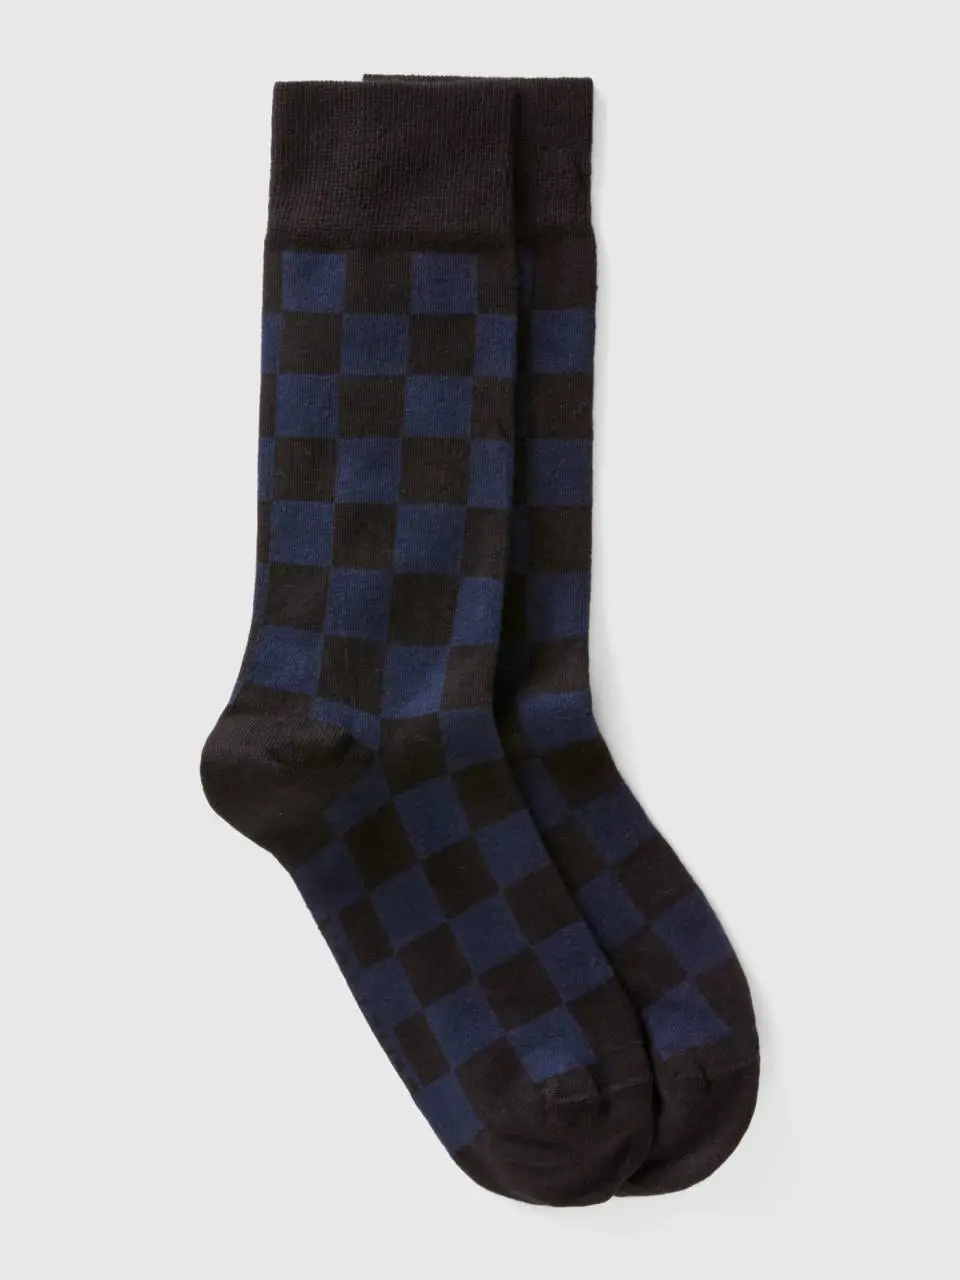 Benetton dark gray and black checkered socks. 1